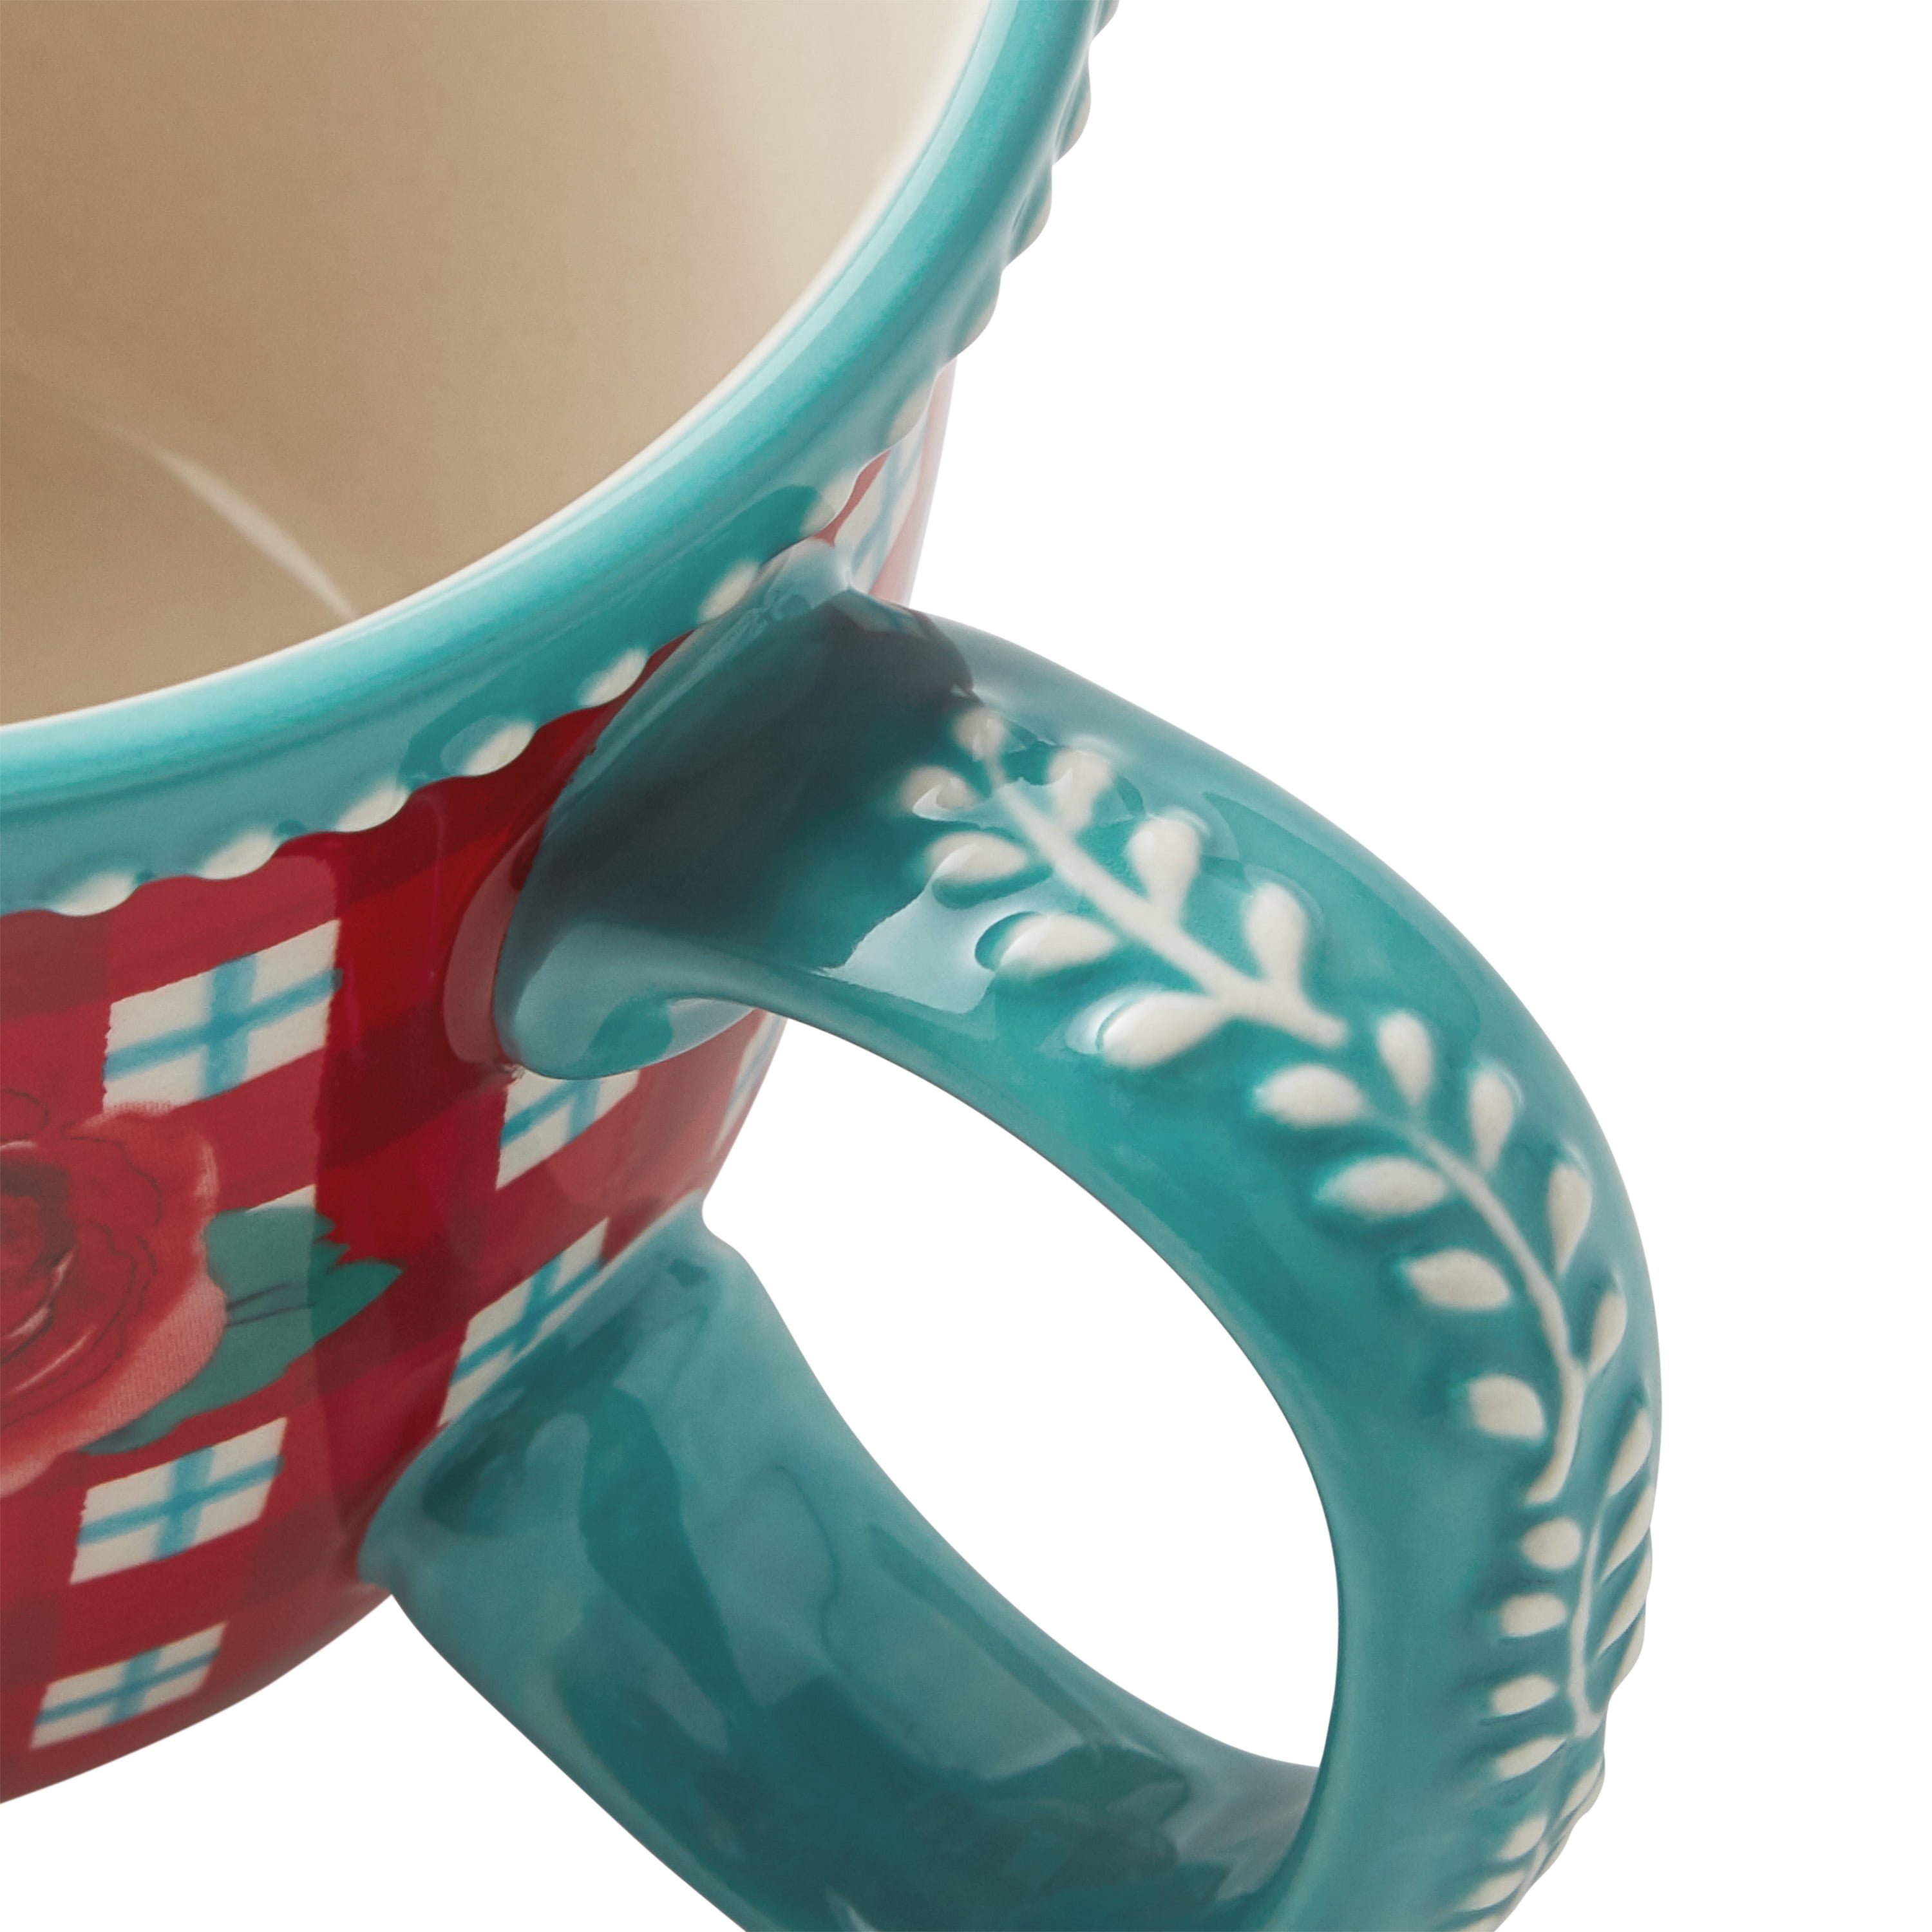 The Pioneer Woman Wishful Winter Cozy Cocoa 16-Ounce Ceramic Mug, Red 